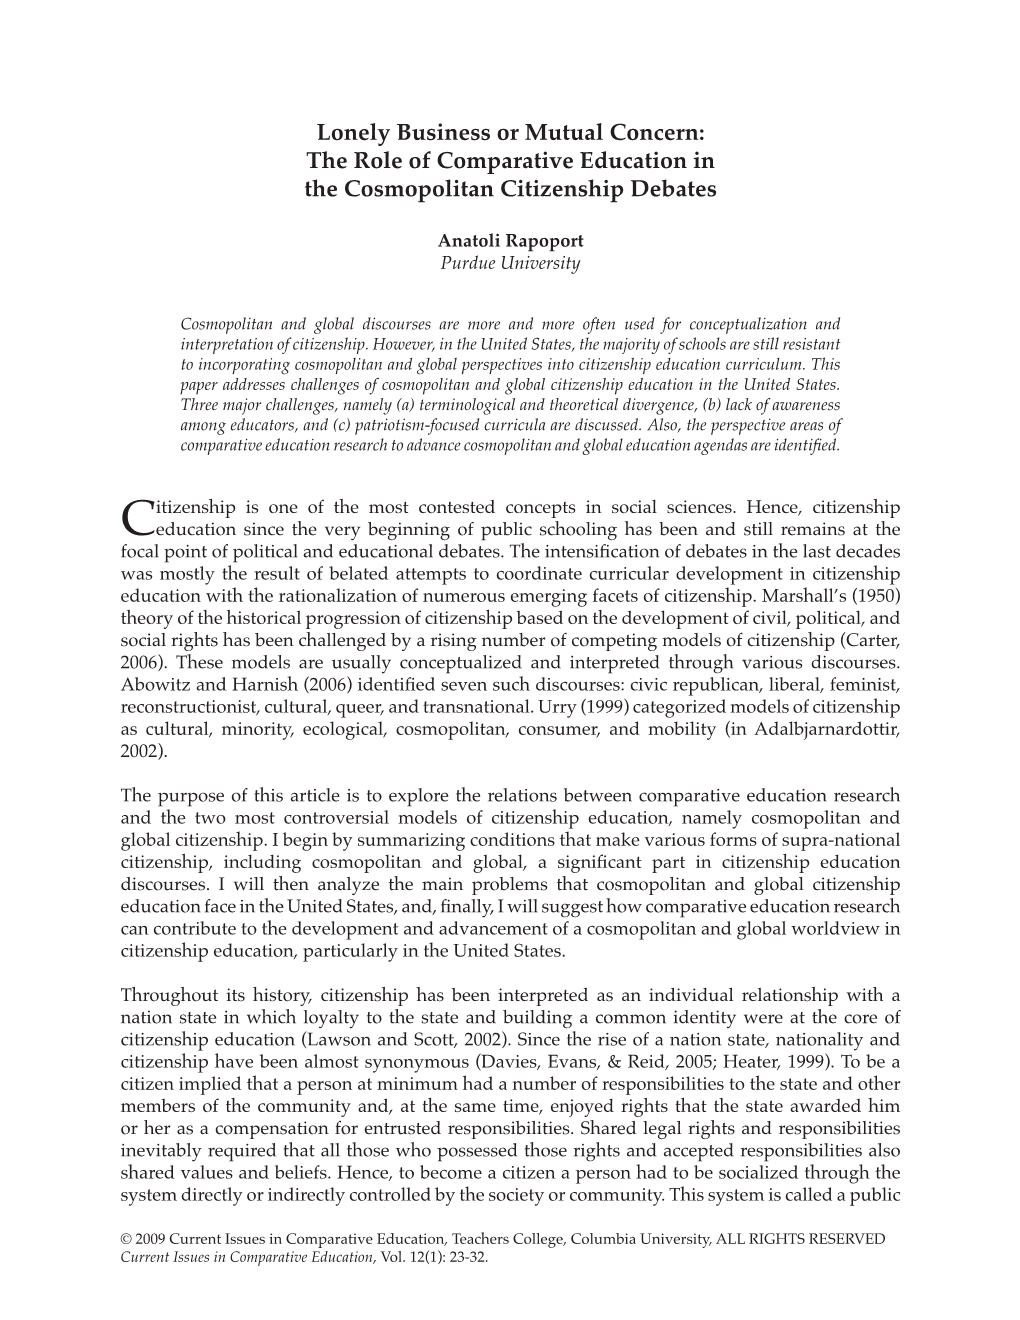 The Role of Comparative Education in the Cosmopolitan Citizenship Debates